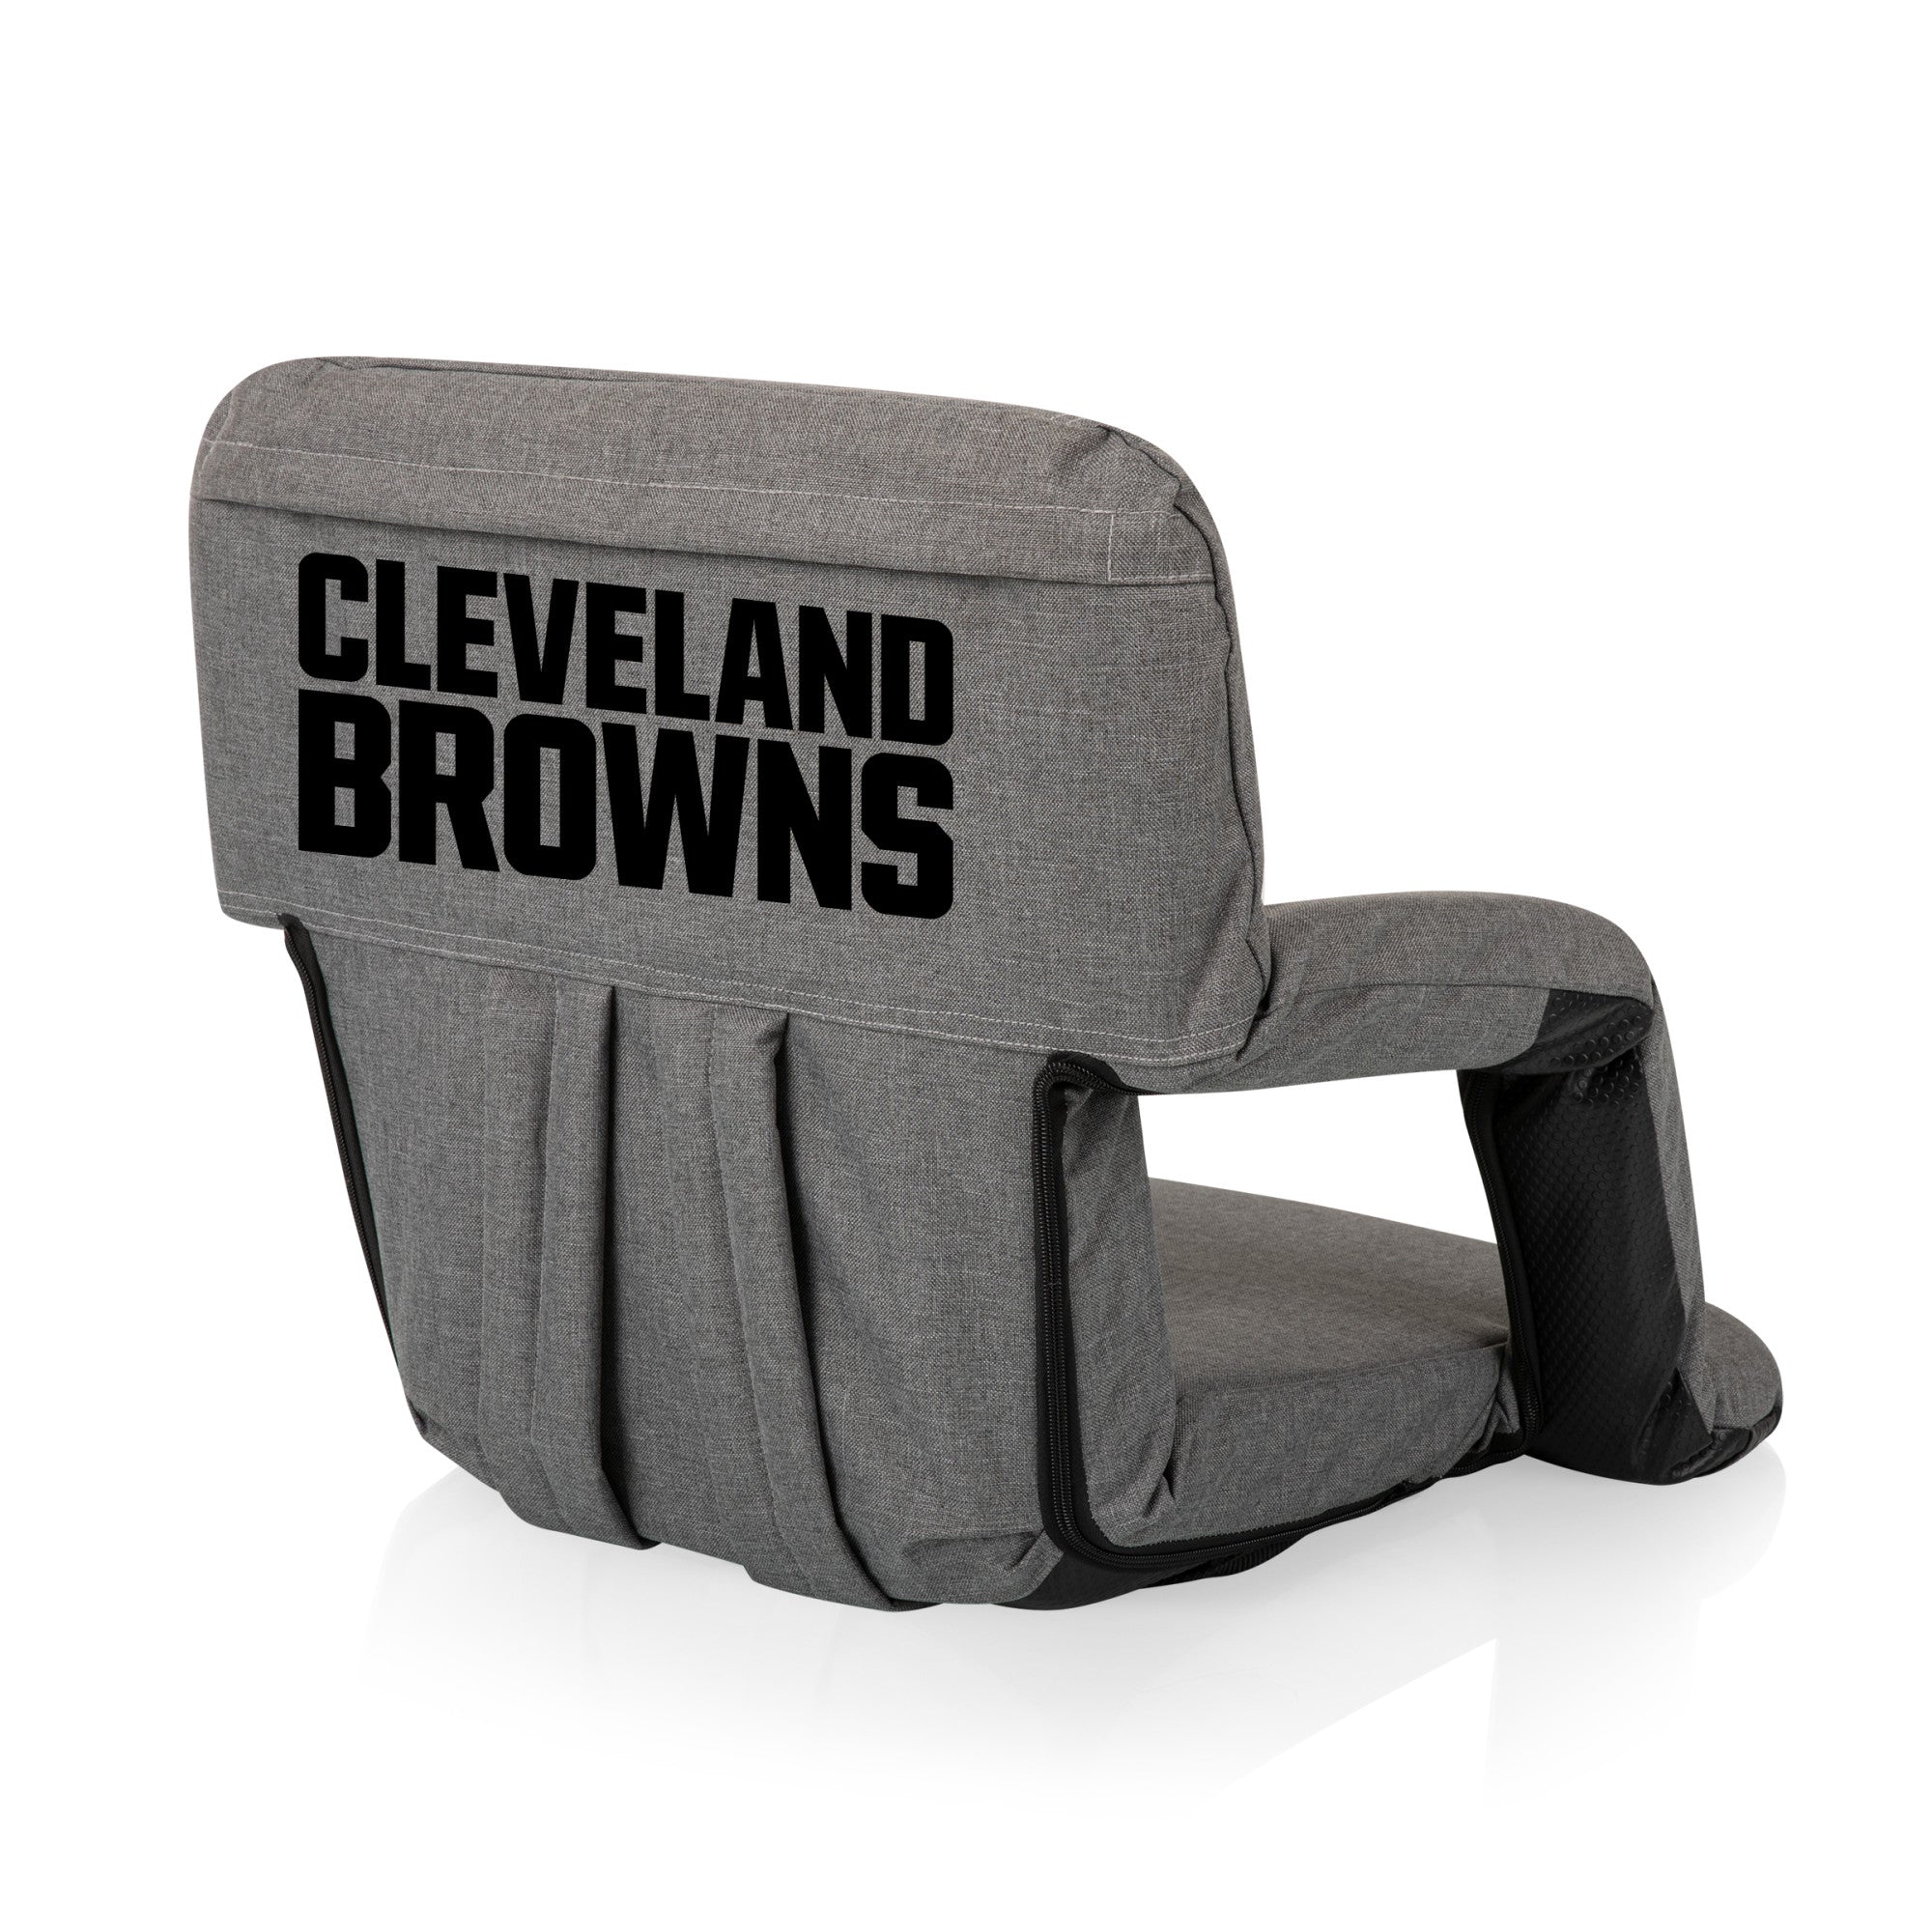 Cleveland Browns - Ventura Portable Reclining Stadium Seat